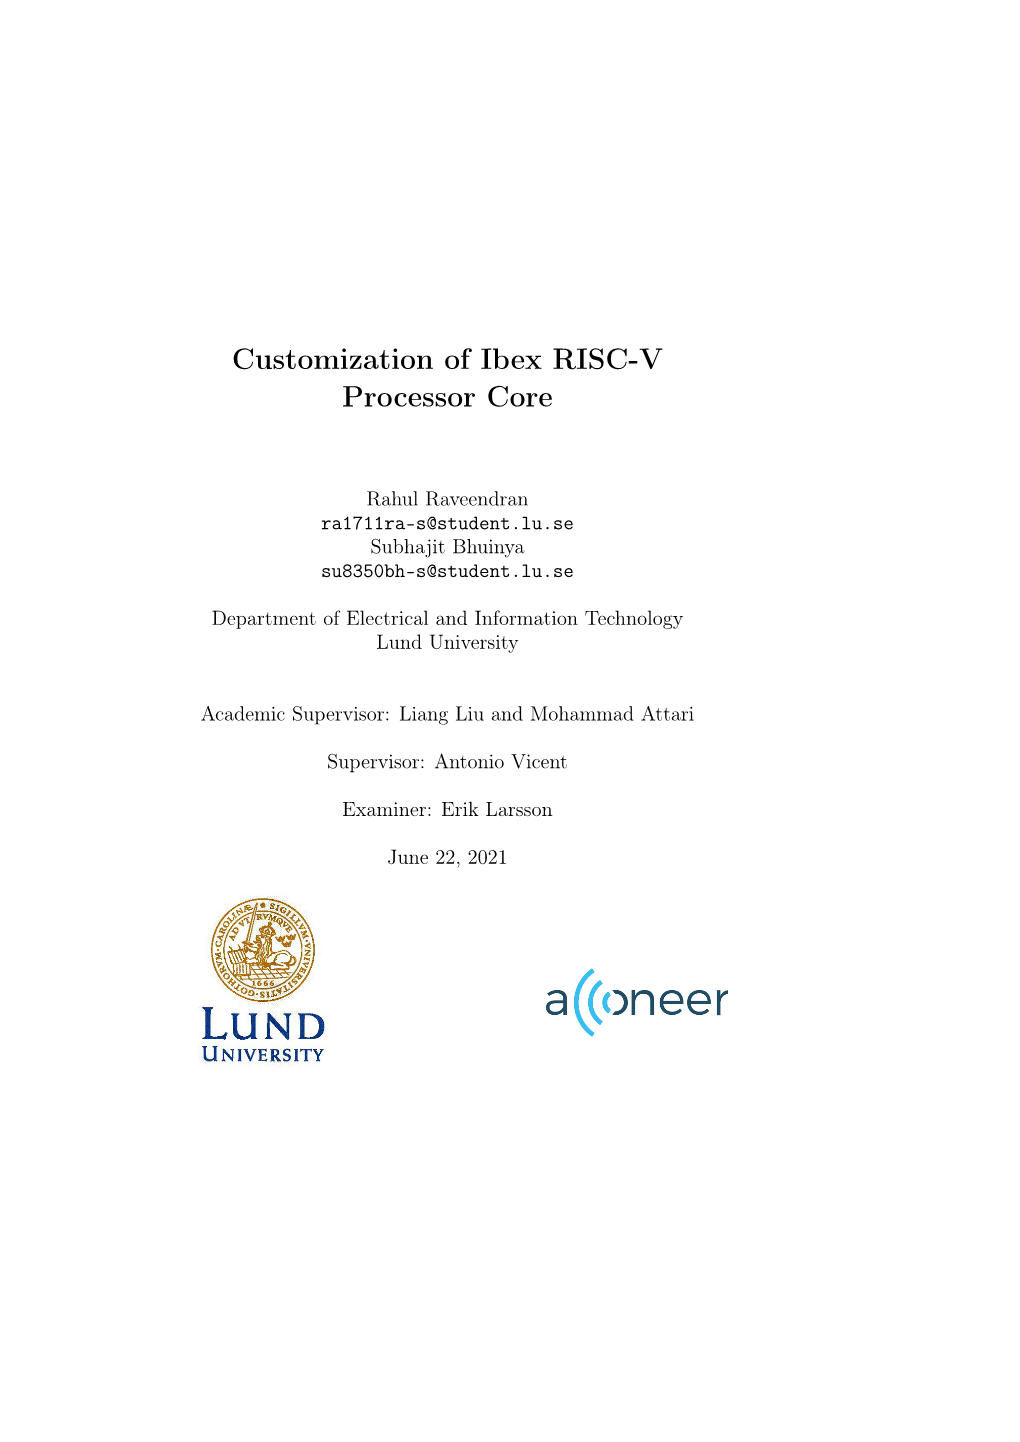 Customization of Ibex RISC-V Processor Core